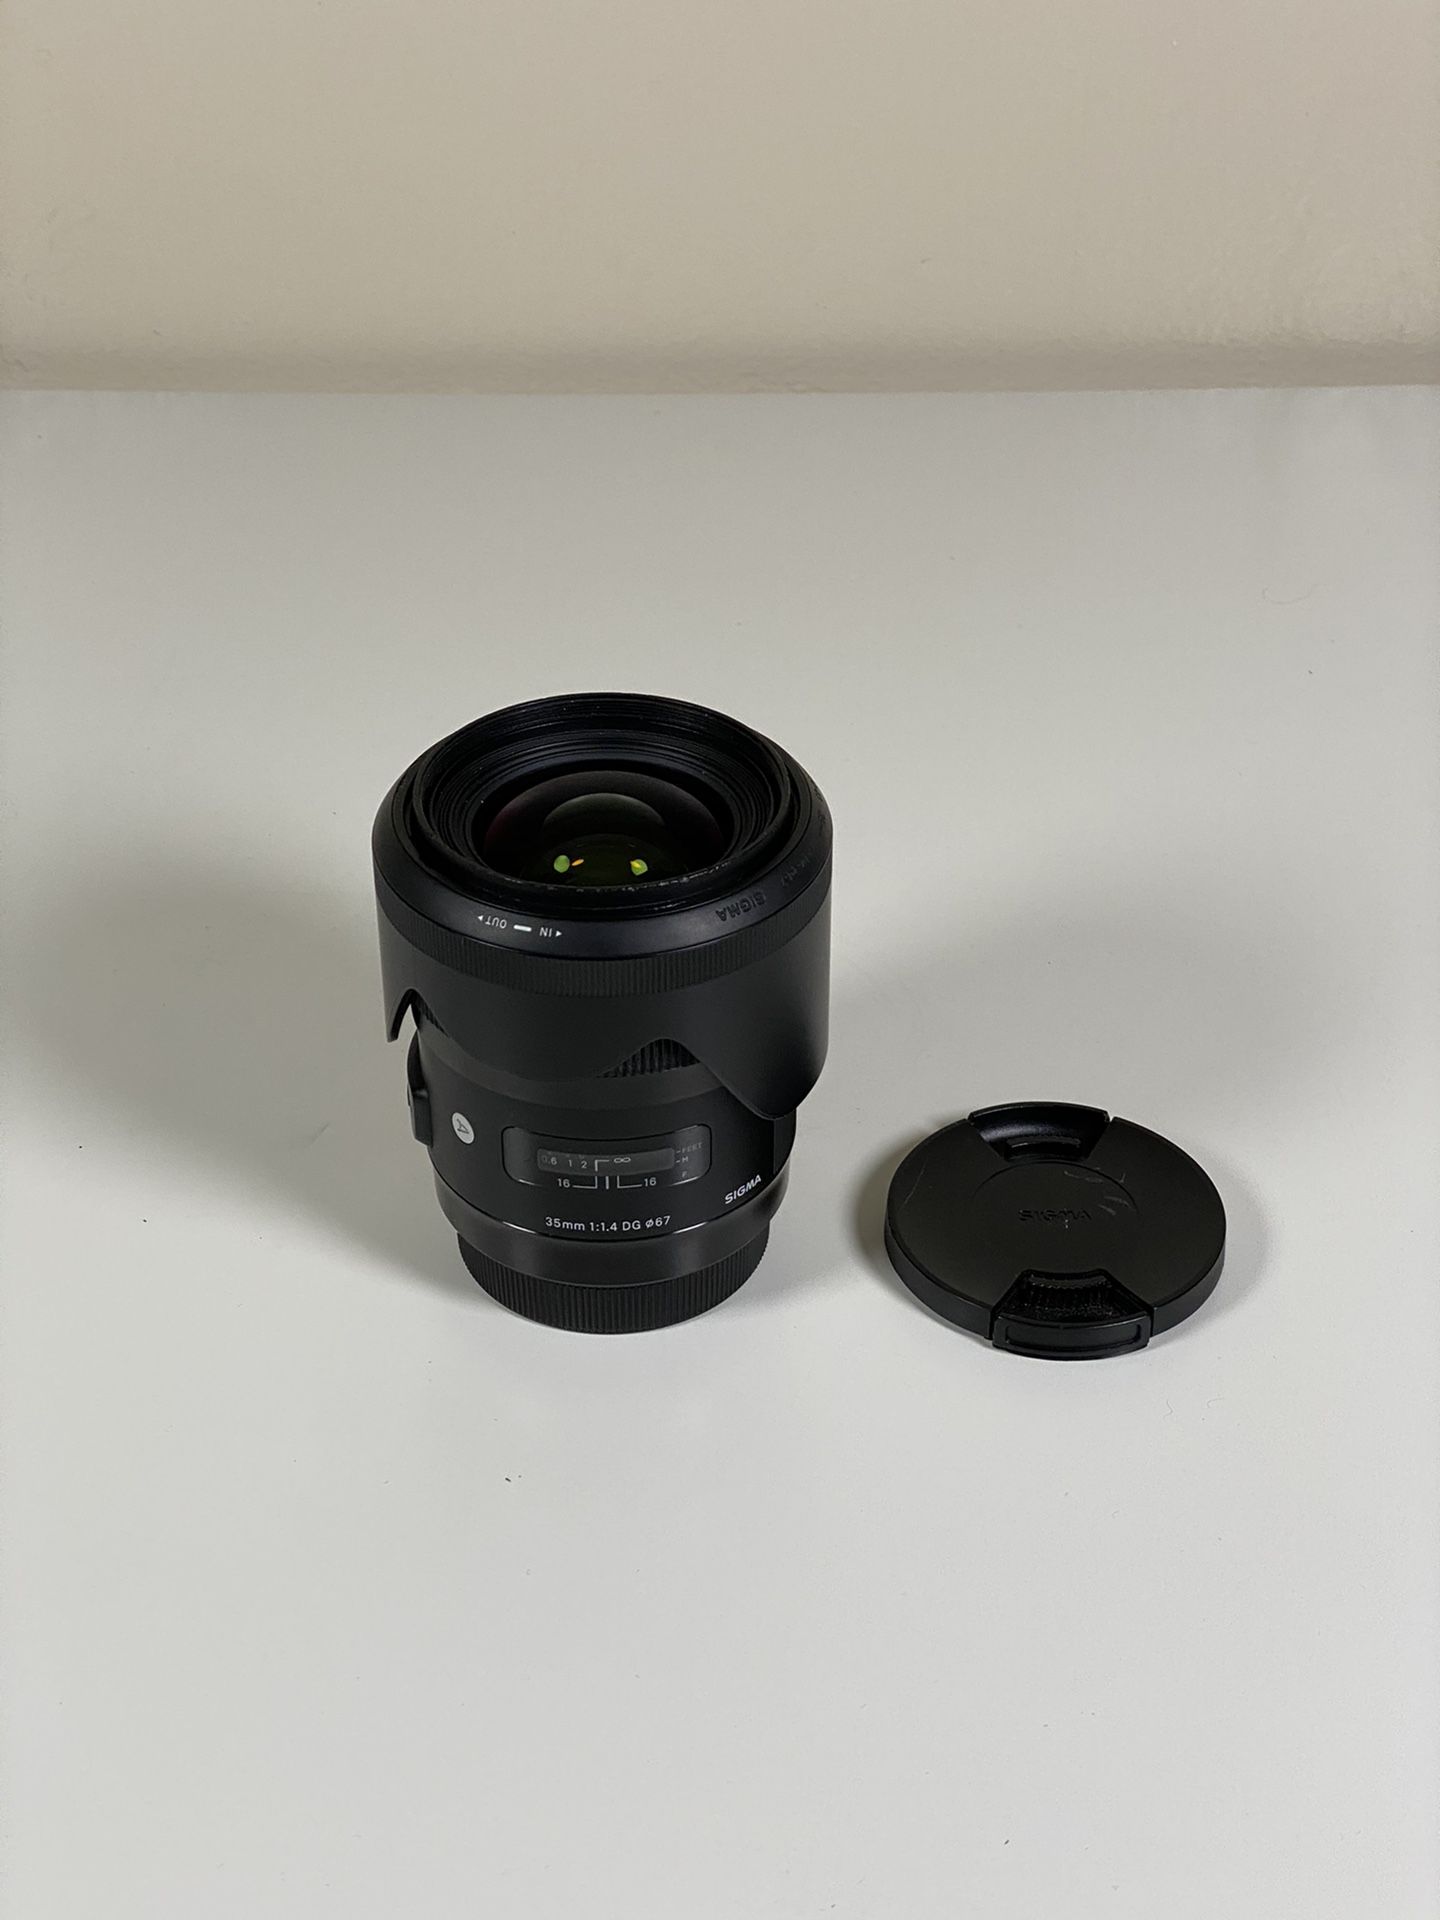 Sigma 35mm f1.4 Canon EF Art lens